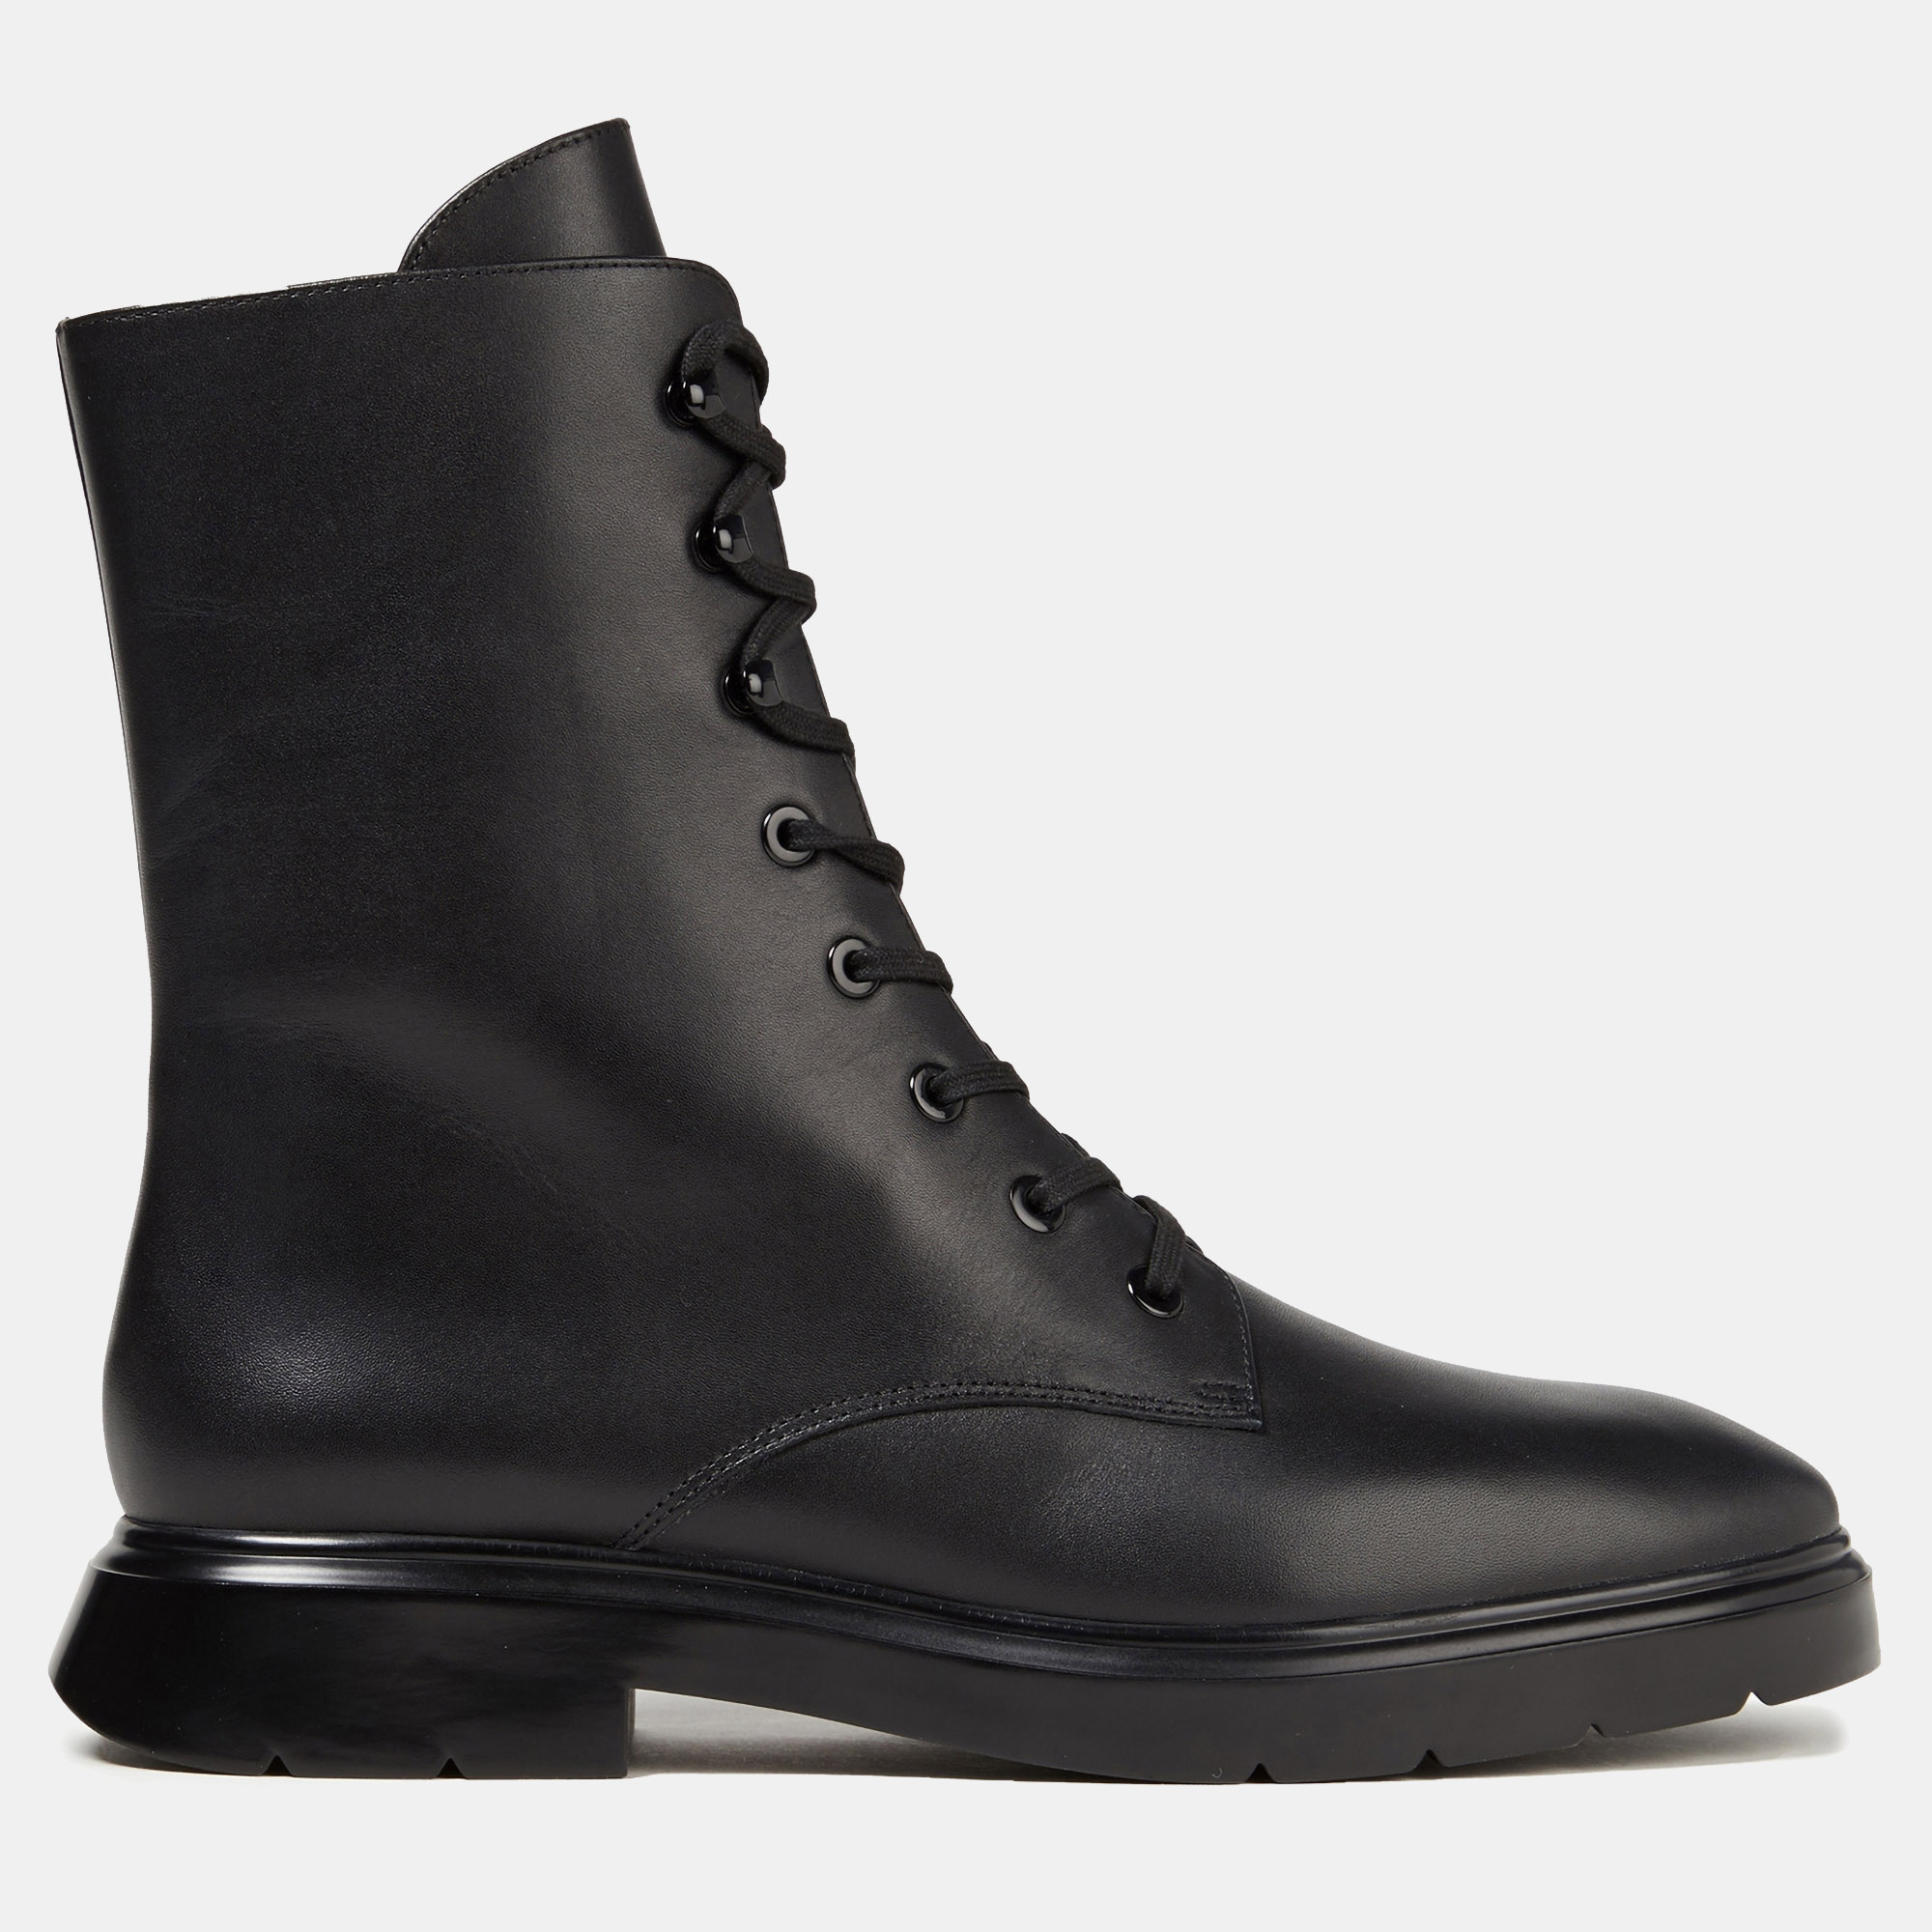 Stuart weitzman black leather ankle boots 40